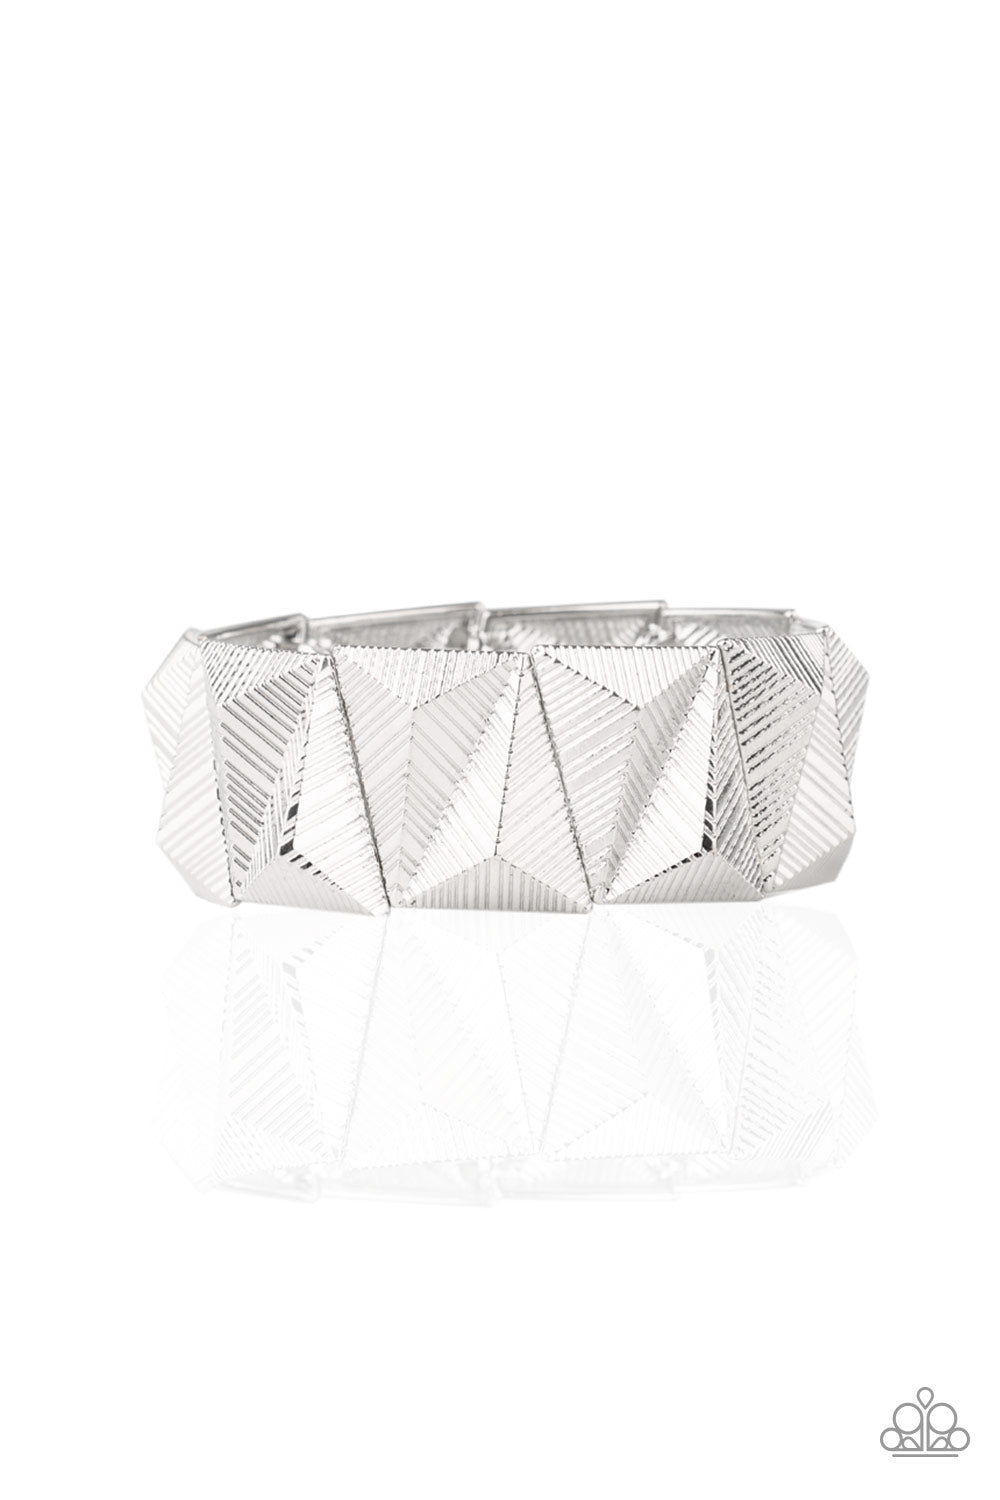 Metallic Geode - Silver bracelet